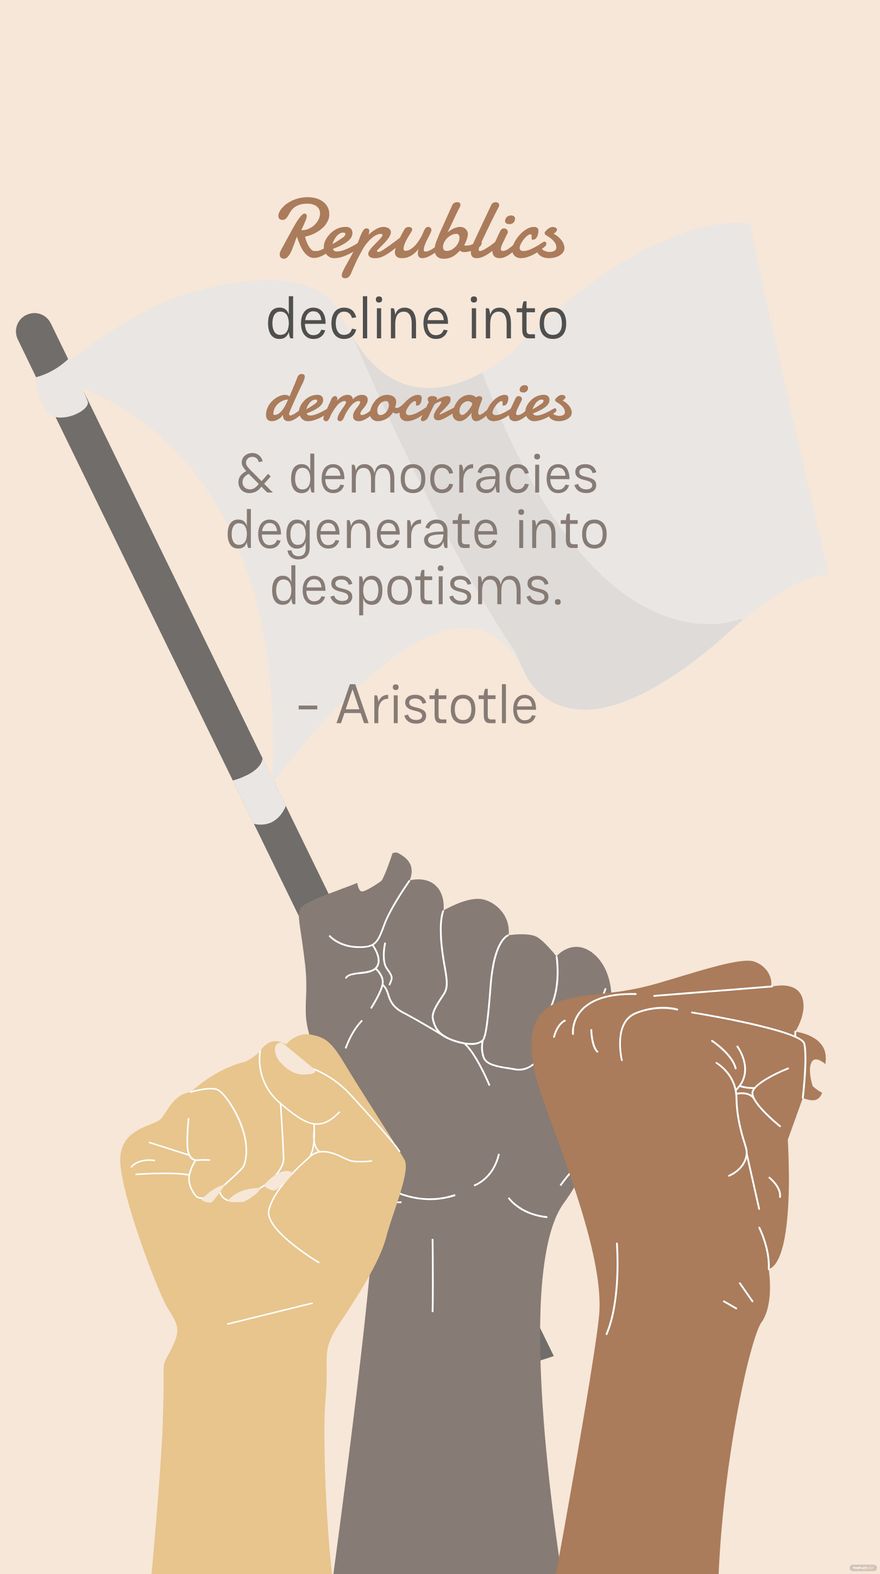 Free Republics decline into democracies and democracies degenerate into despotisms. - Aristotle in JPEG